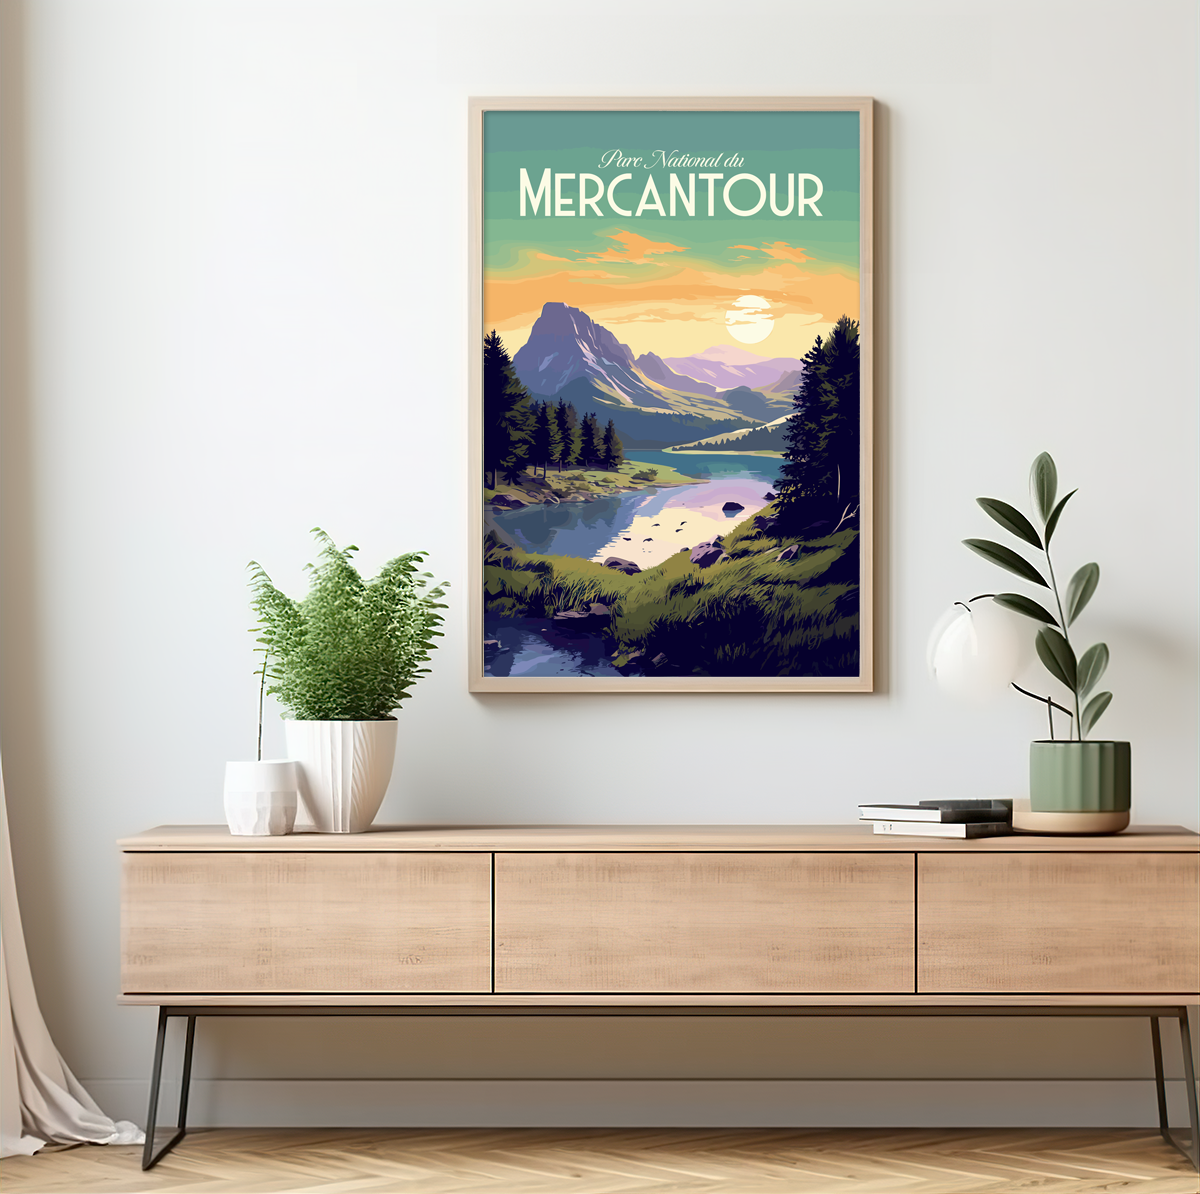 Mercantour poster by bon voyage design